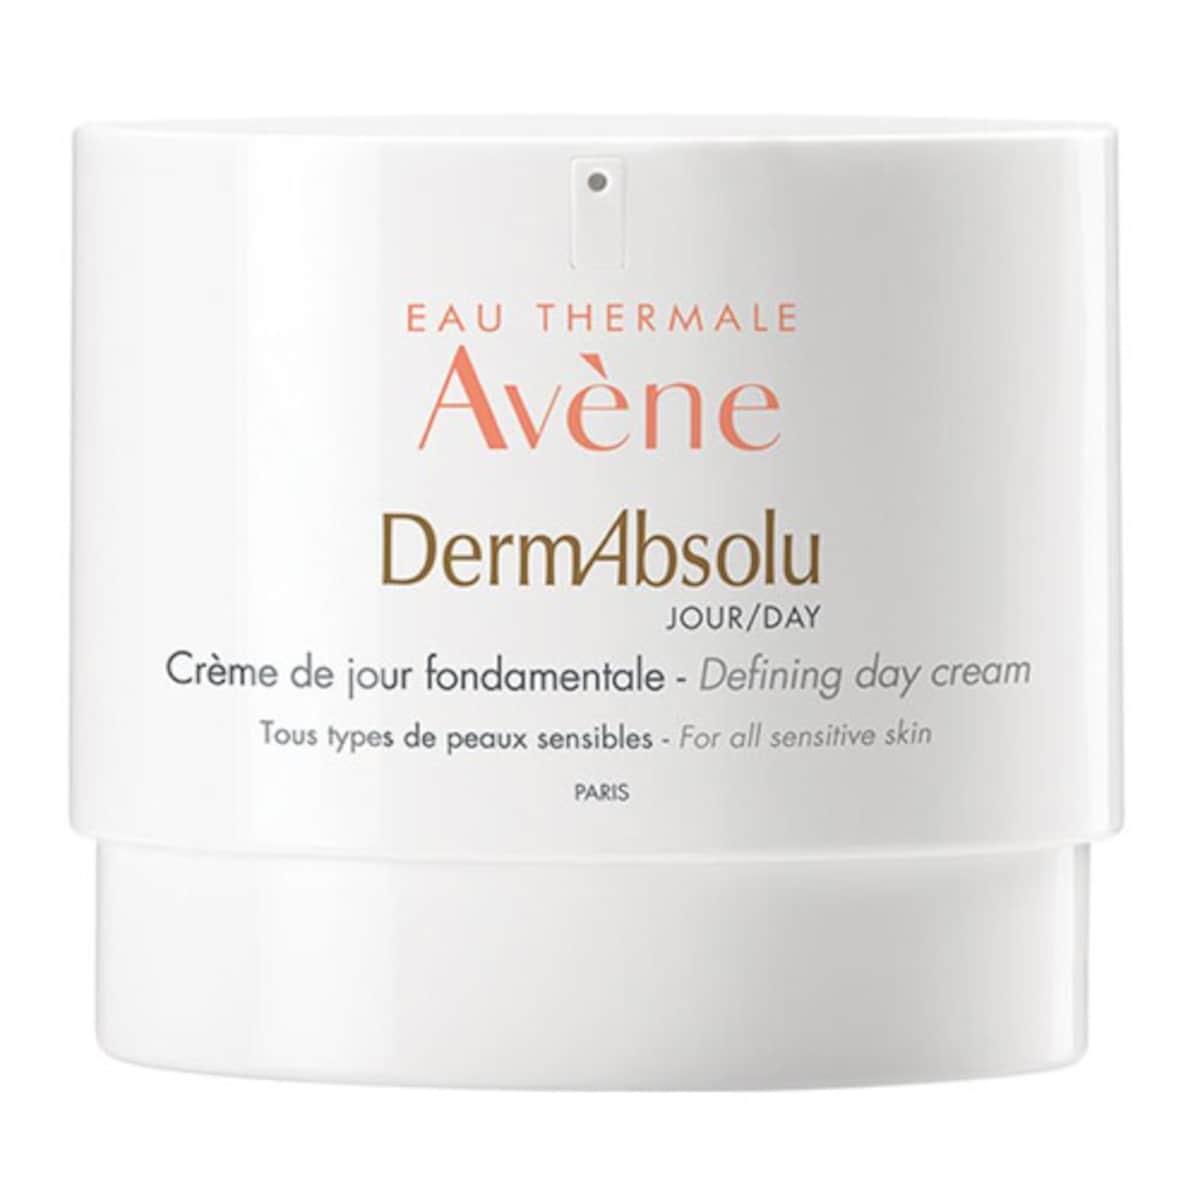 Avene DermAbsolu Defining Day Cream 40ml